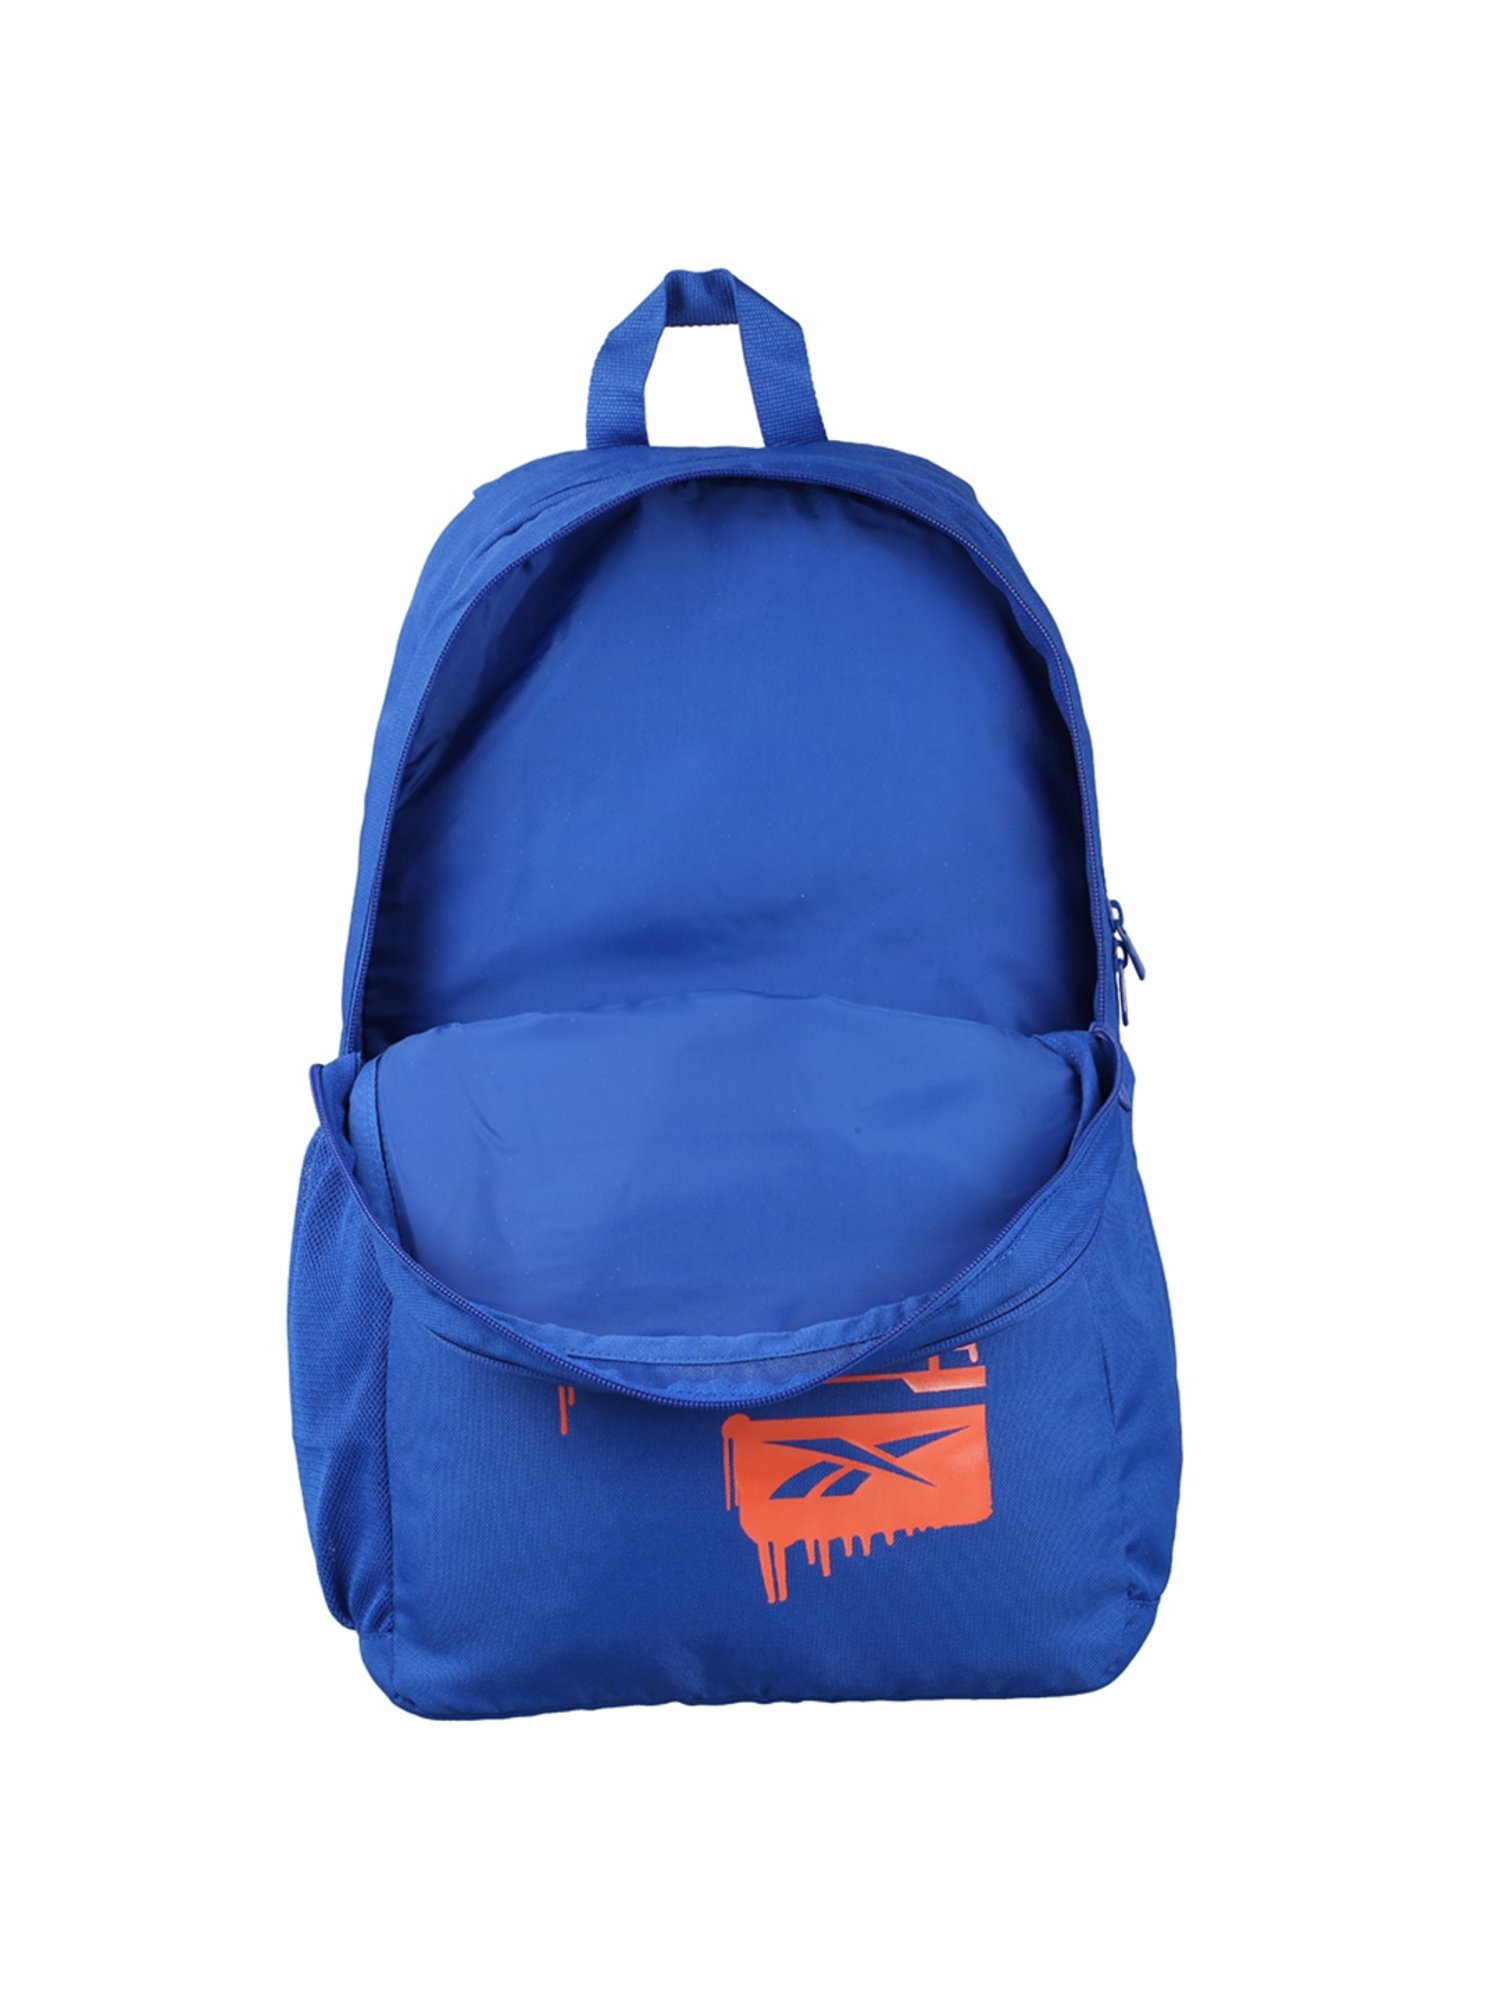 Reebok School/Day Trip Backpack | SidelineSwap